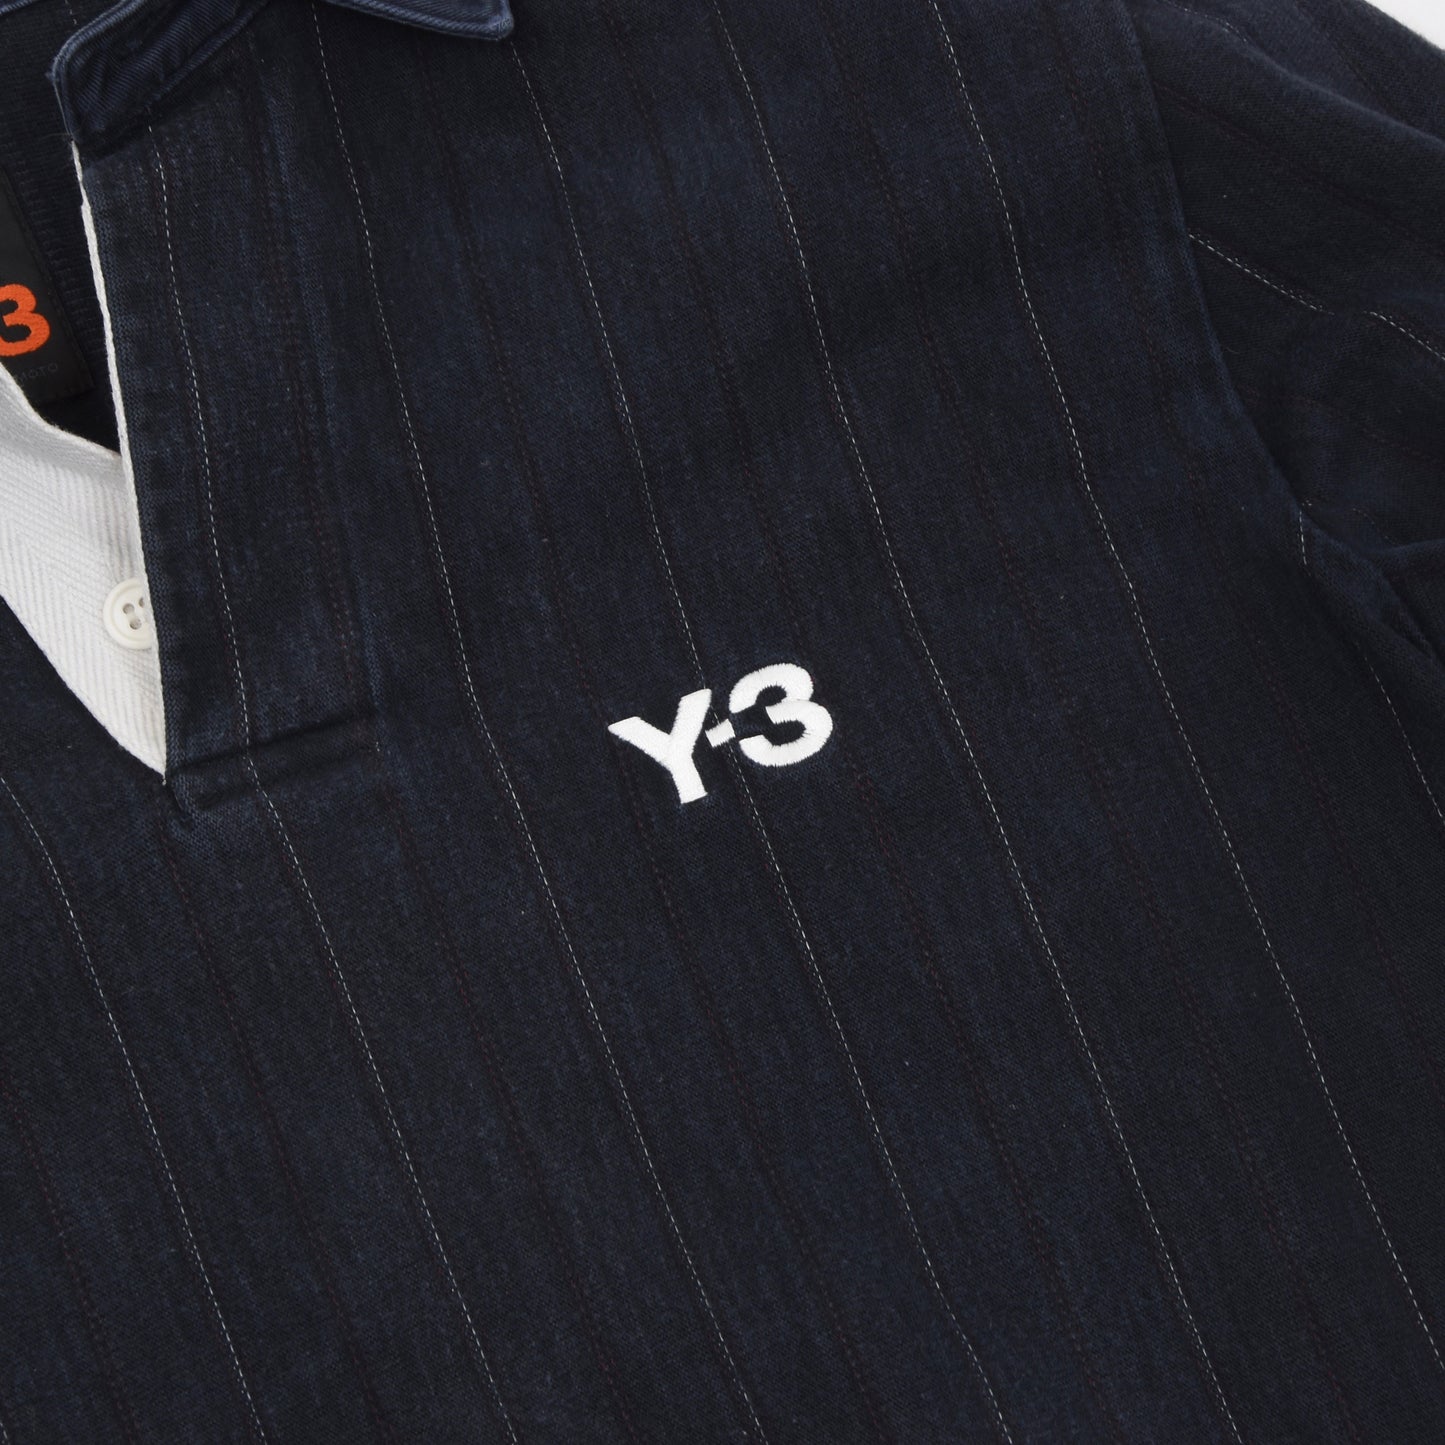 Y3 Yohji Yamamoto Rugby Shirt Size XS